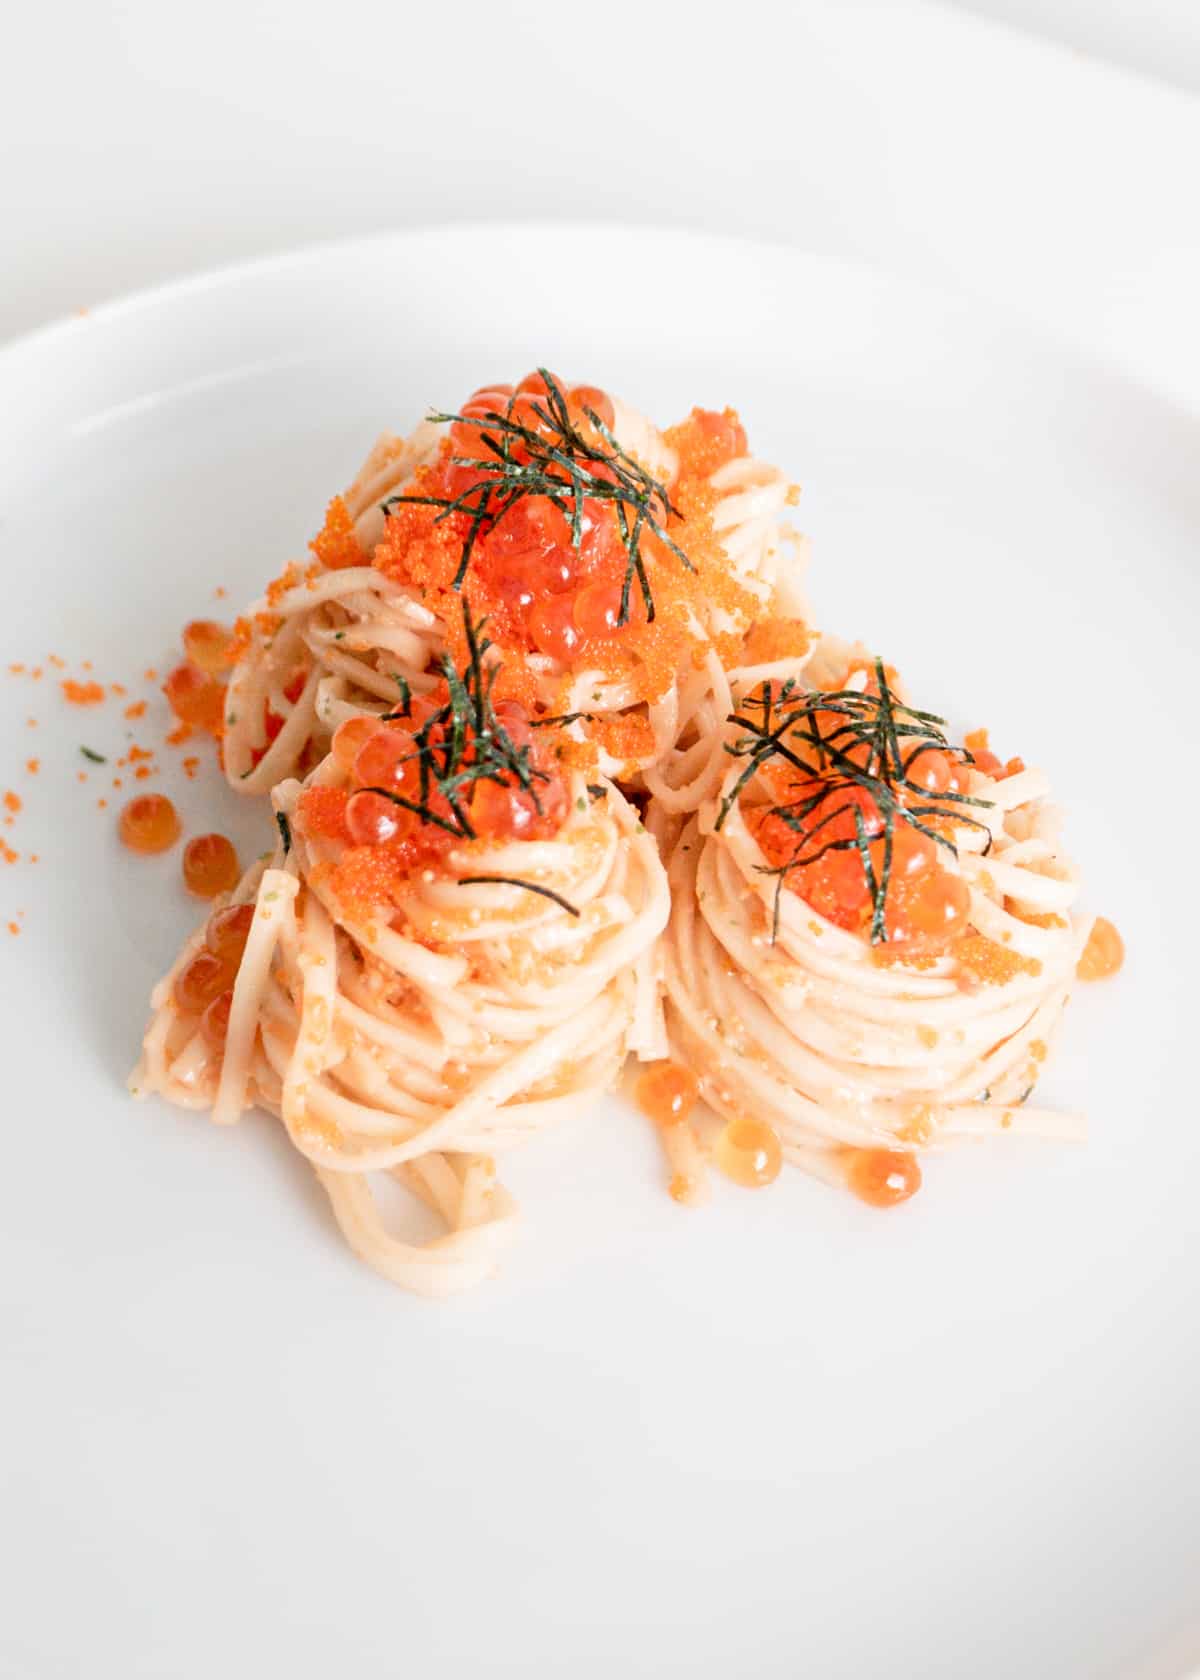 Japanese Mentaiko Spaghetti Noodles 明太子パスタ